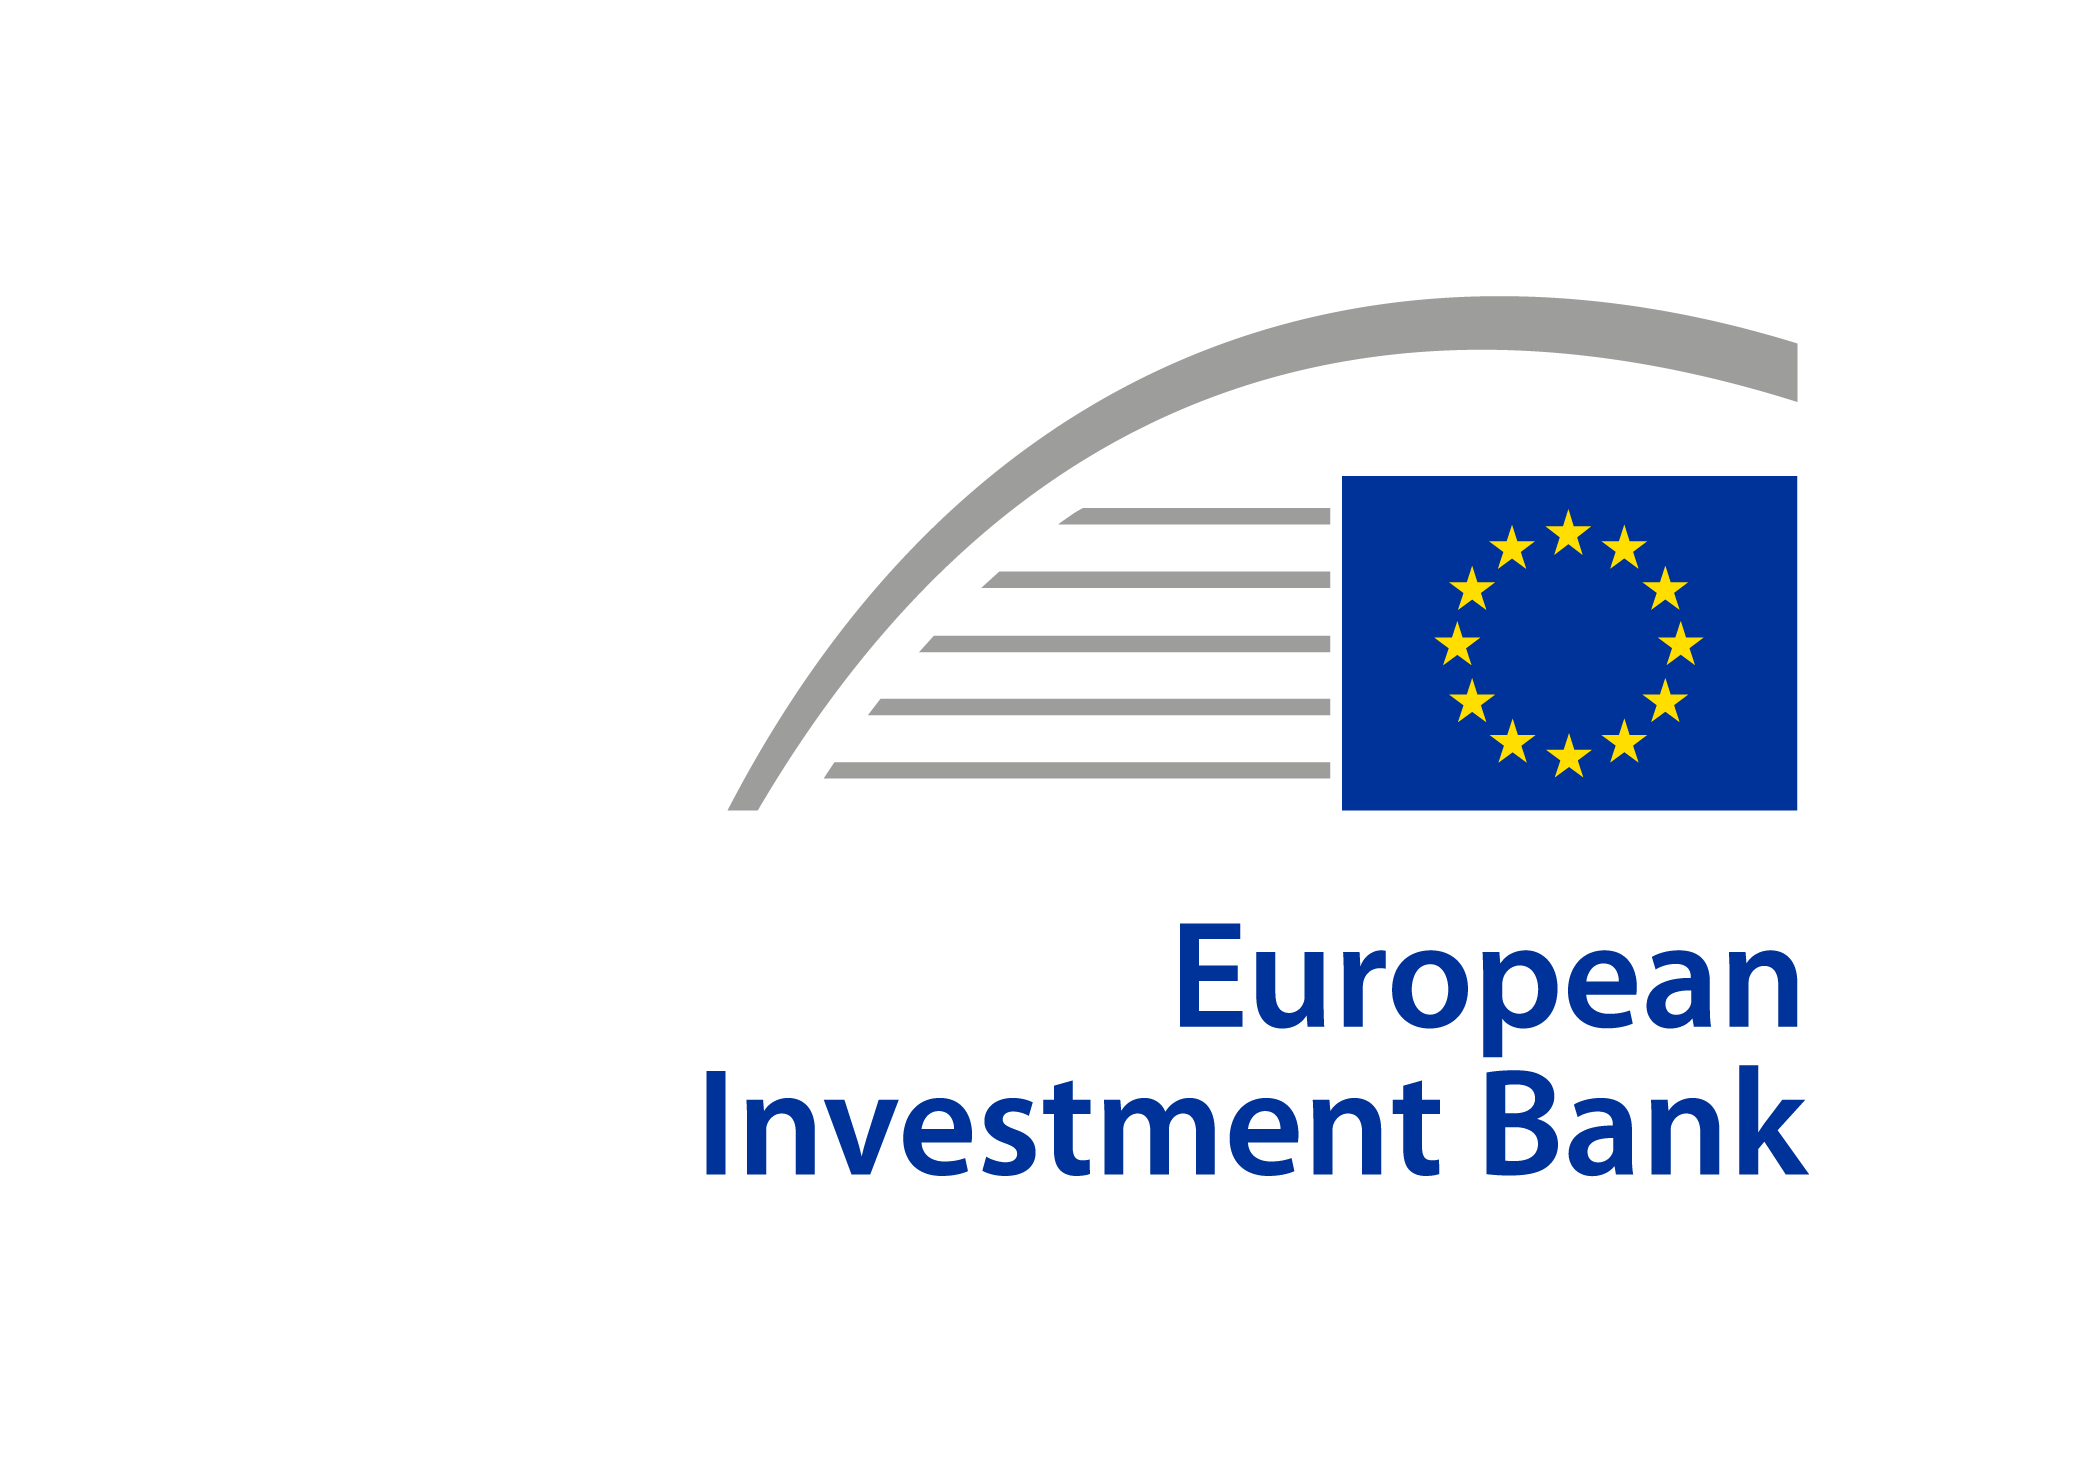 European Investment Bank (EIB) logo